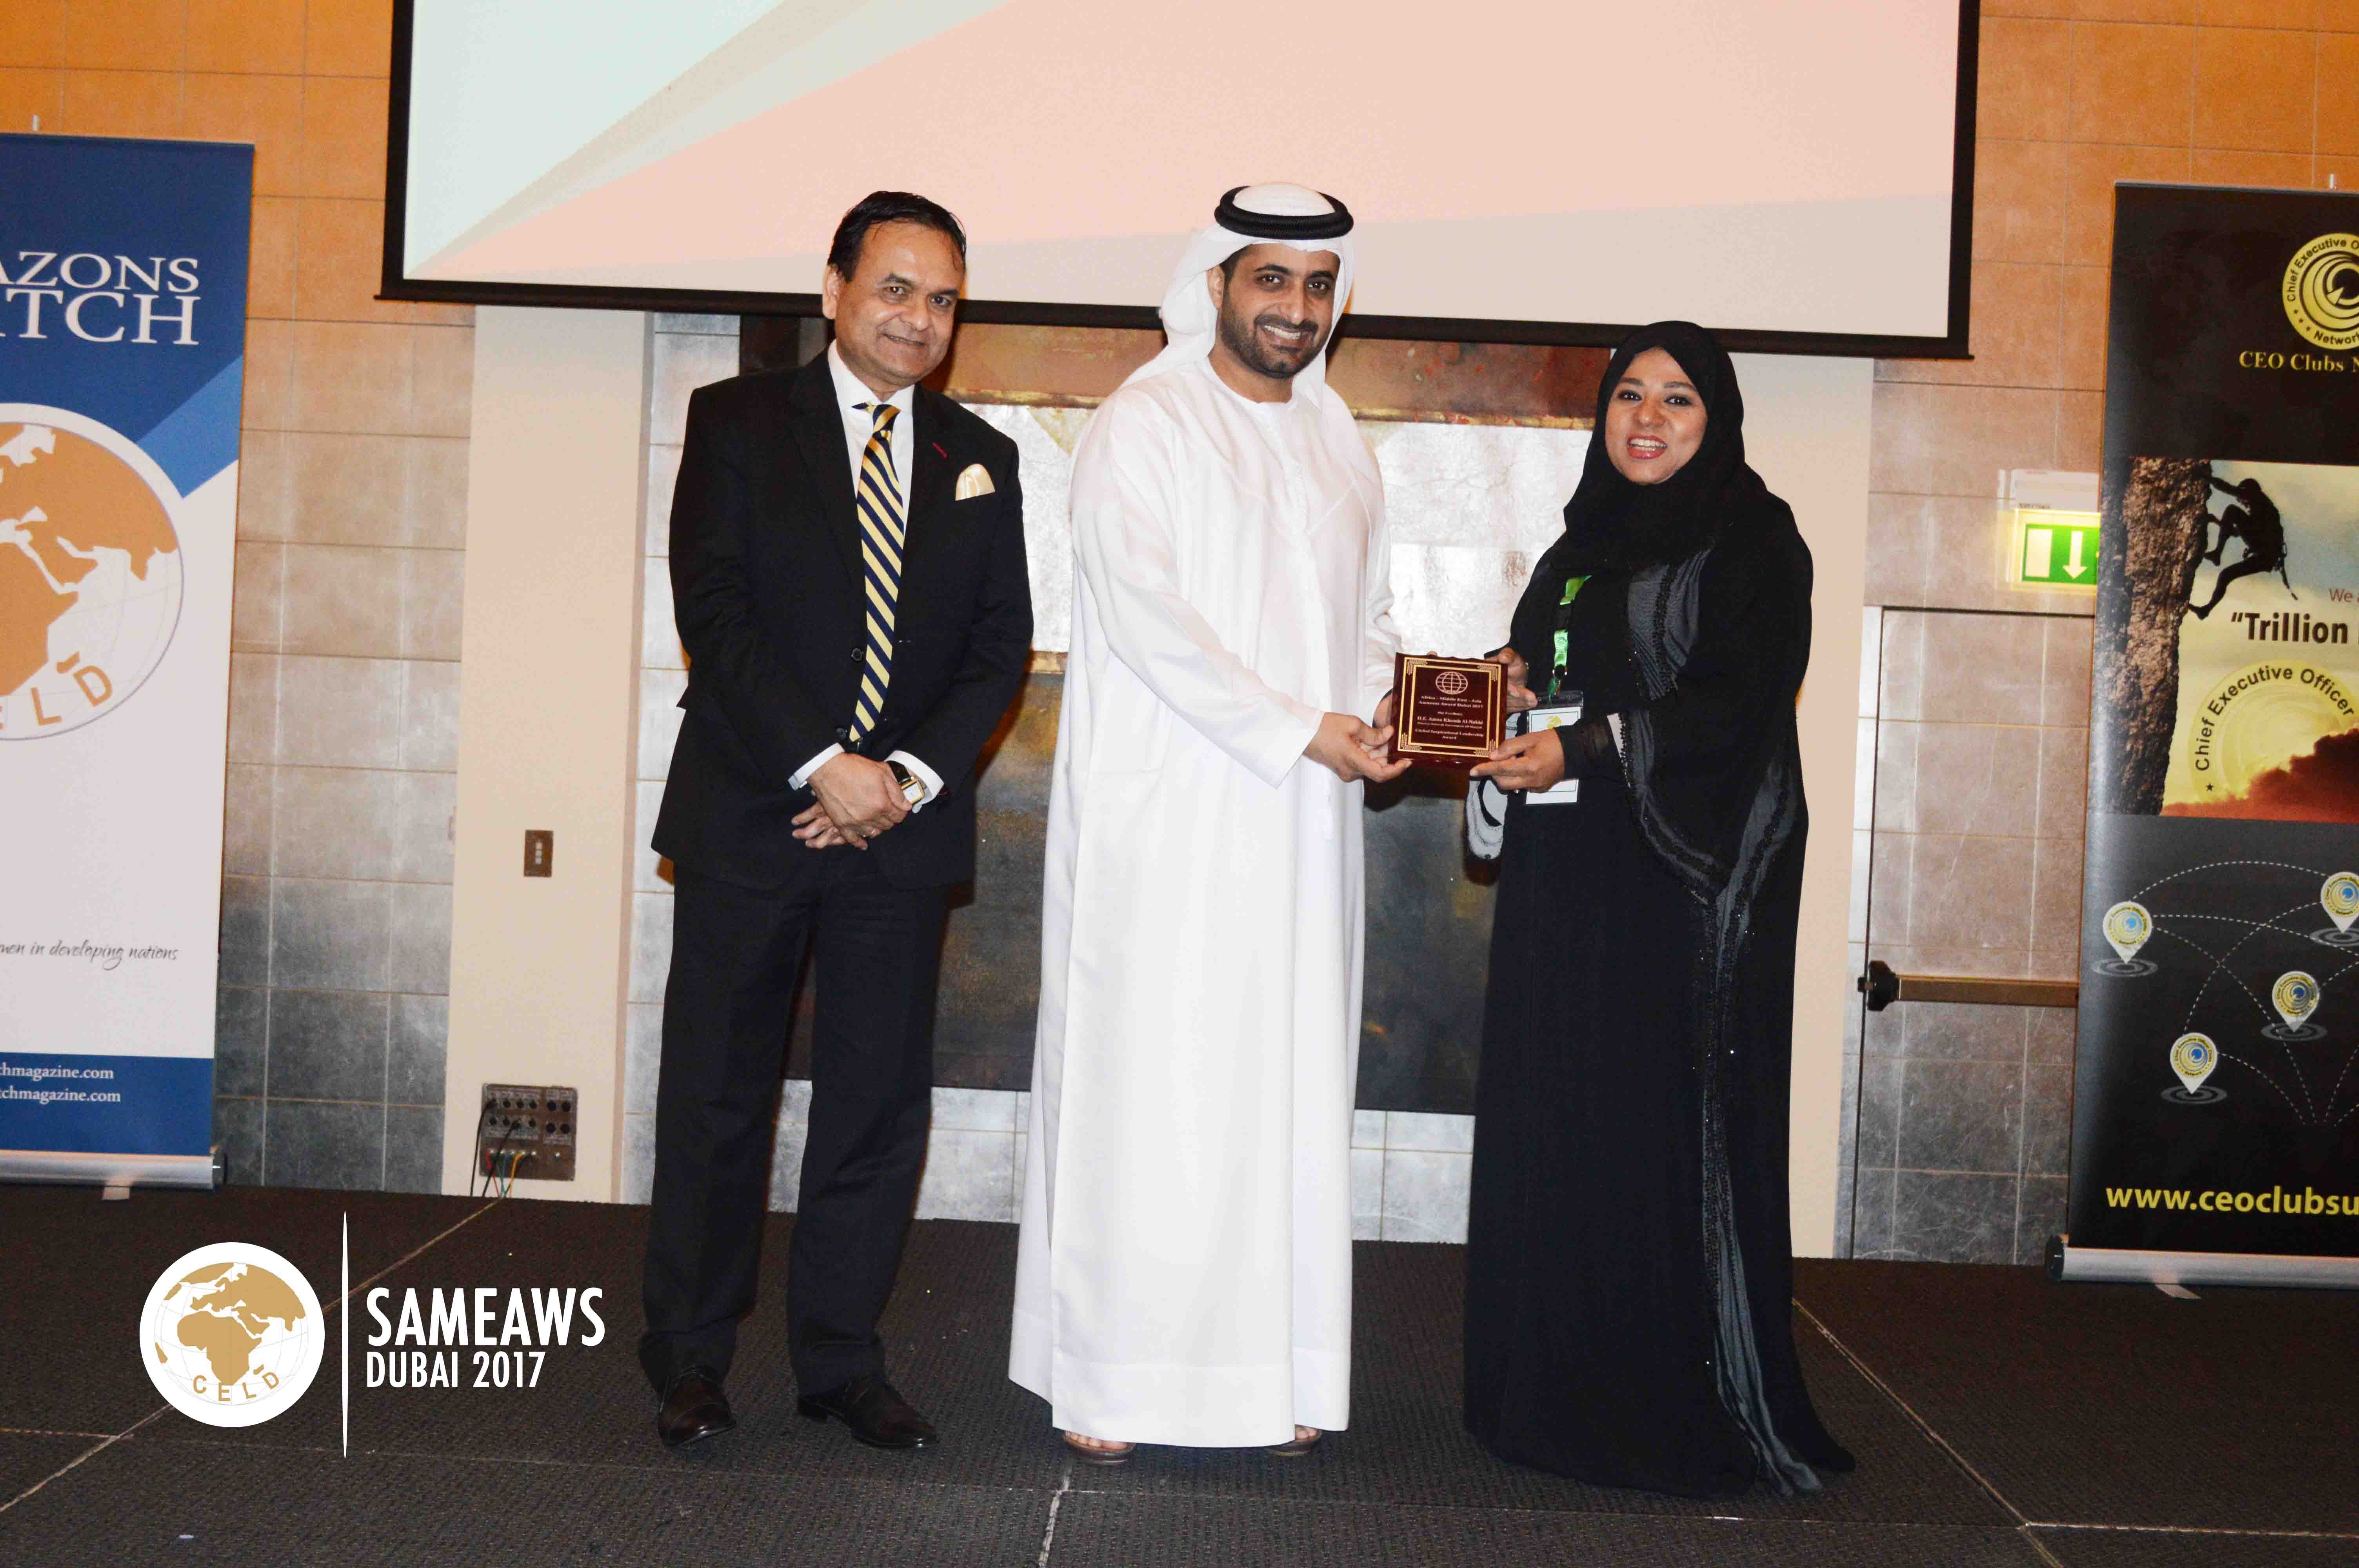 H.E Amna Al Nakhi (DG. Govt. of Sharjah) recieving CELD's Global Female Inspirational Leadership Award during SAMEAWS 2017